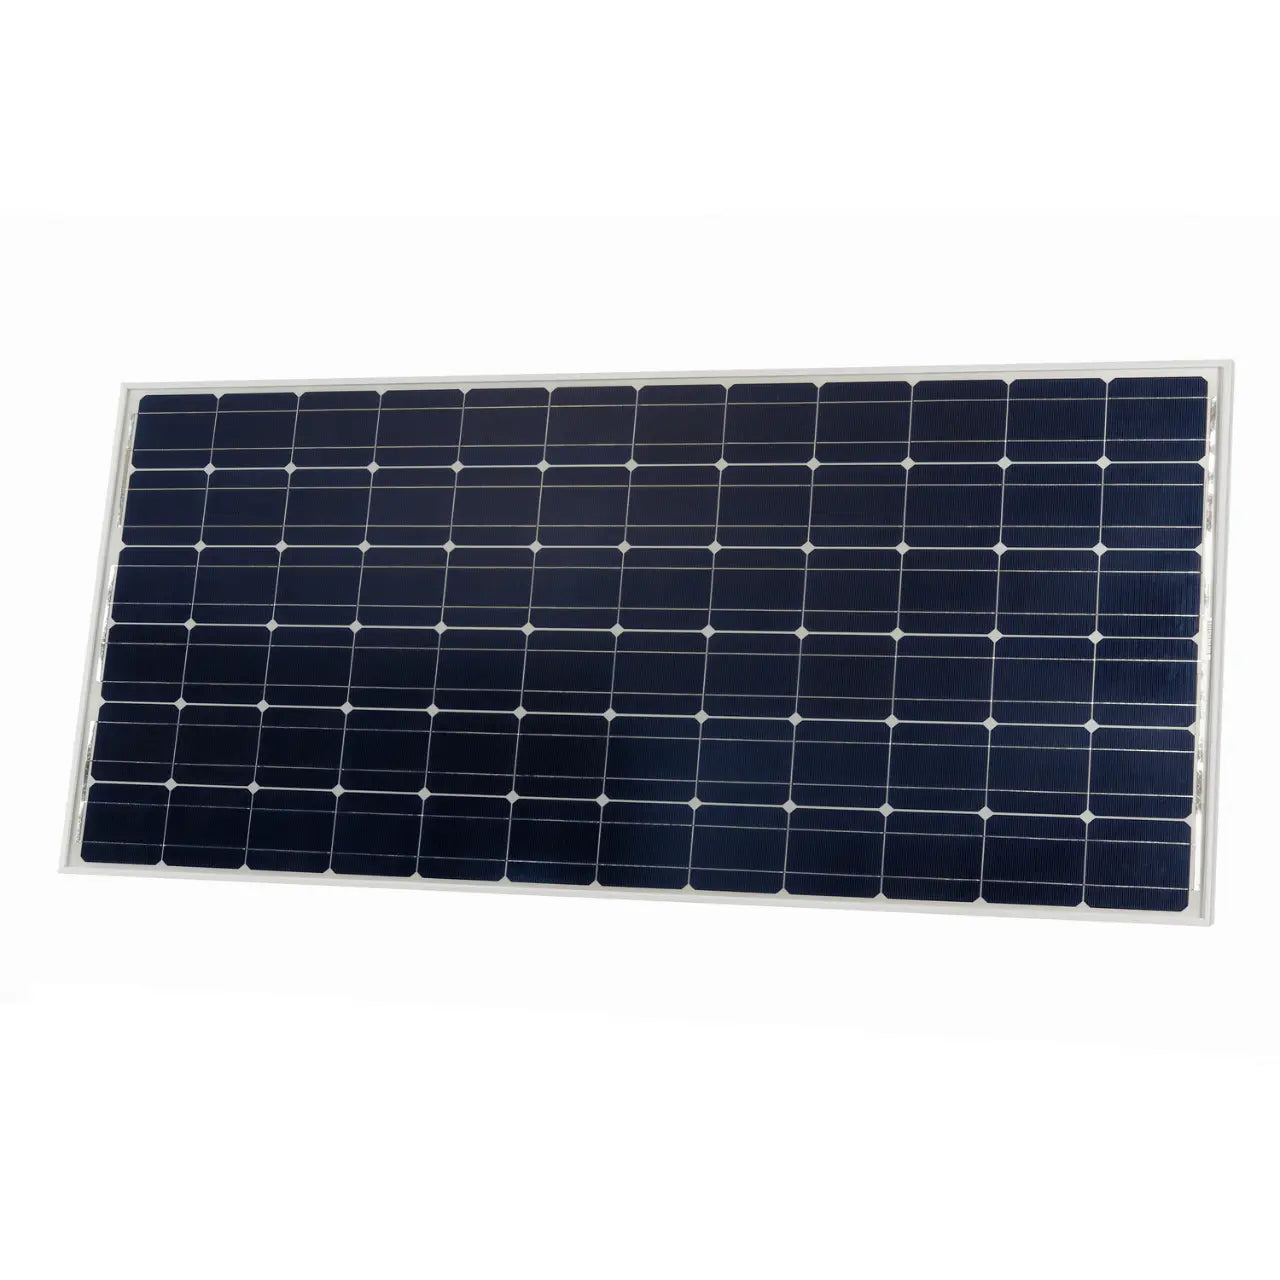 Victron Energy 20V 305W BlueSolar Monocrystalline Solar Panel